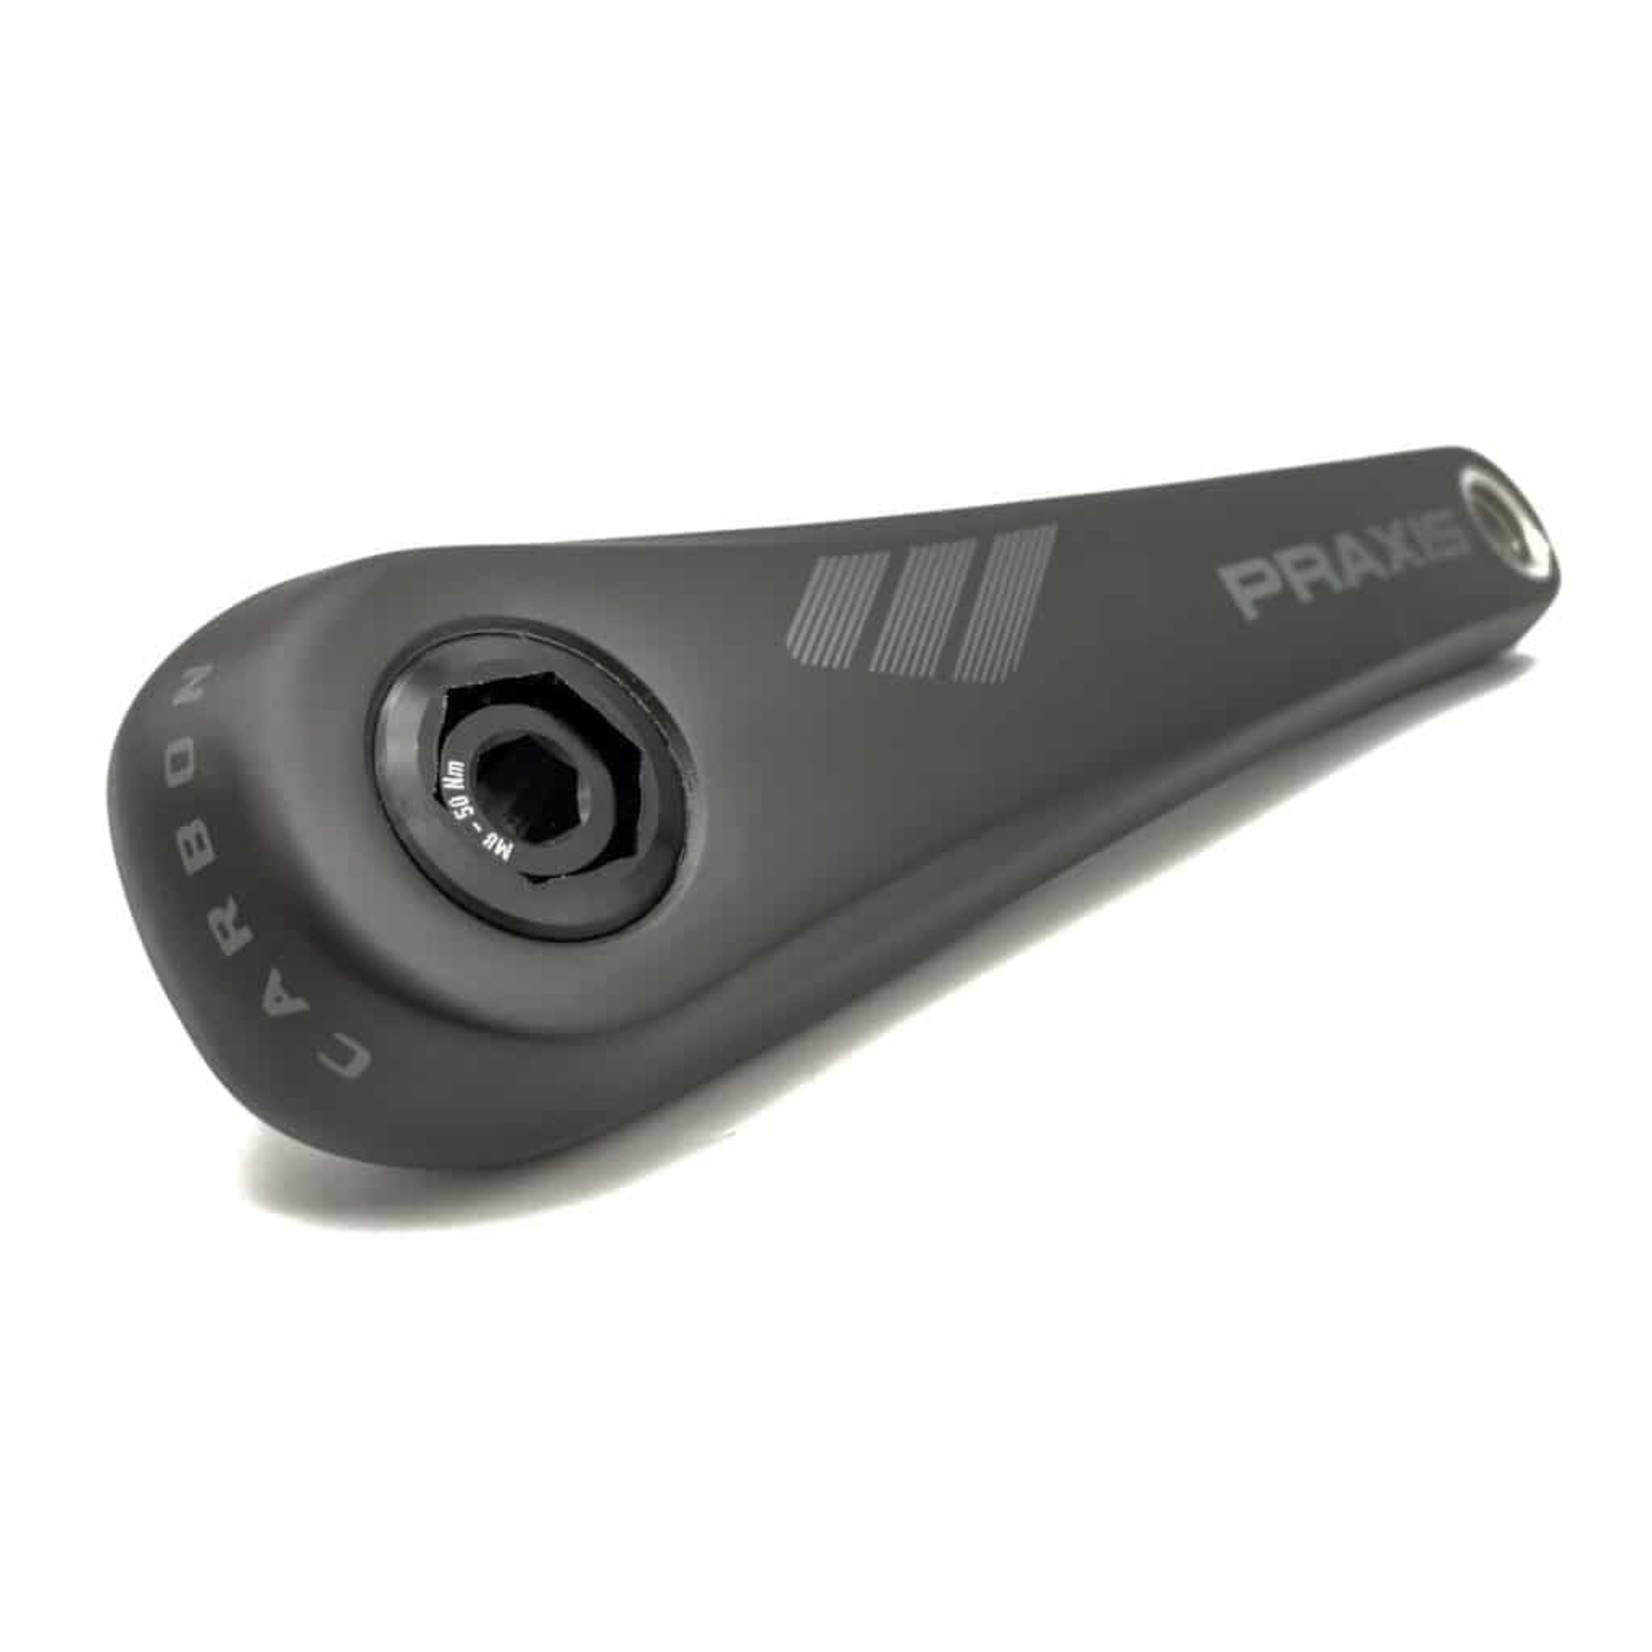 Praxis Praxis e-Bike cranks - Bosch/Yamaha - Carbon, 165mm